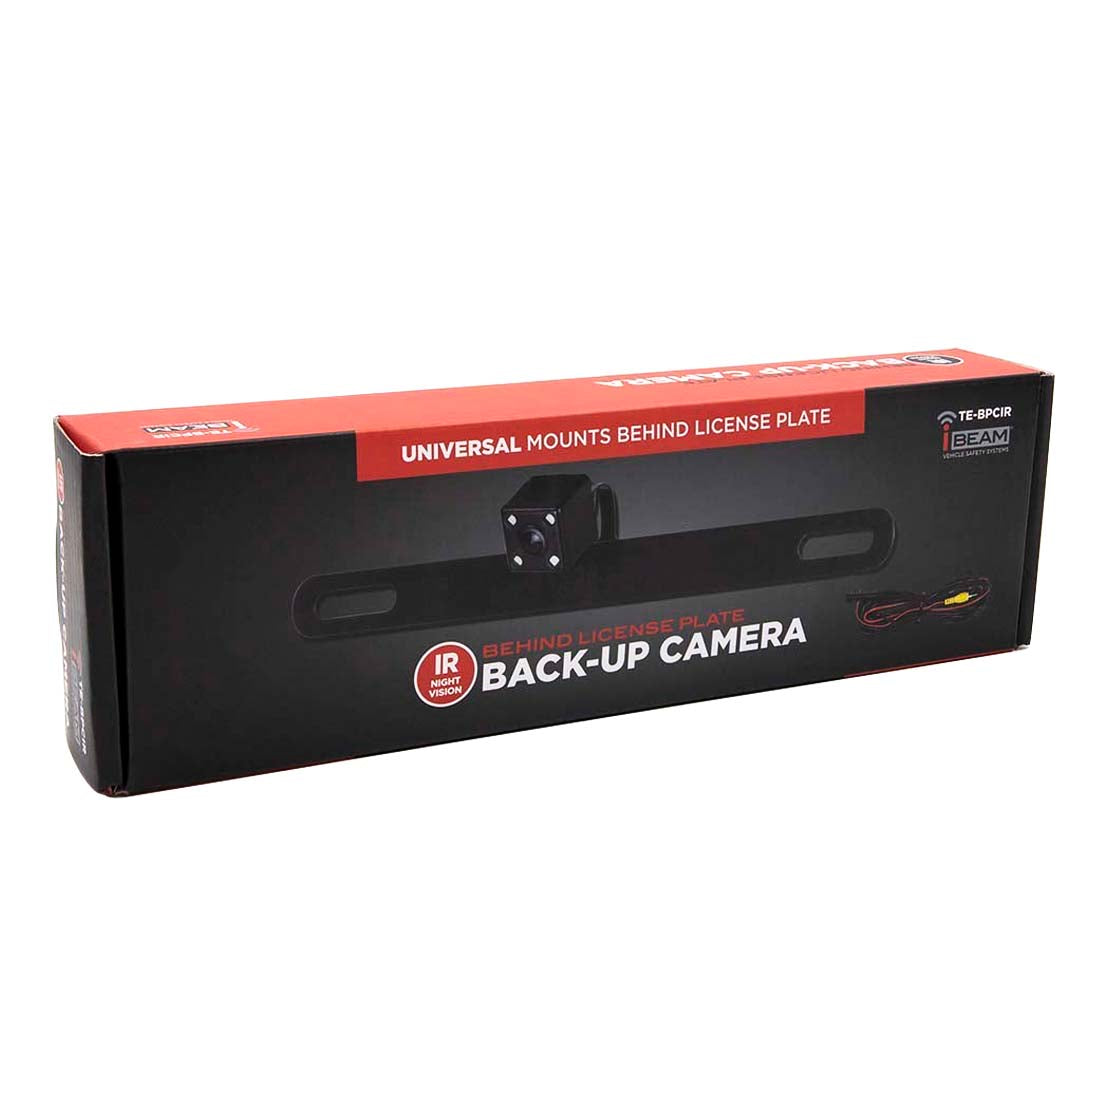 iBeam TE-BPCIR Behind License Plate Mount Rear-View Backup Camera w/ IR LEDs